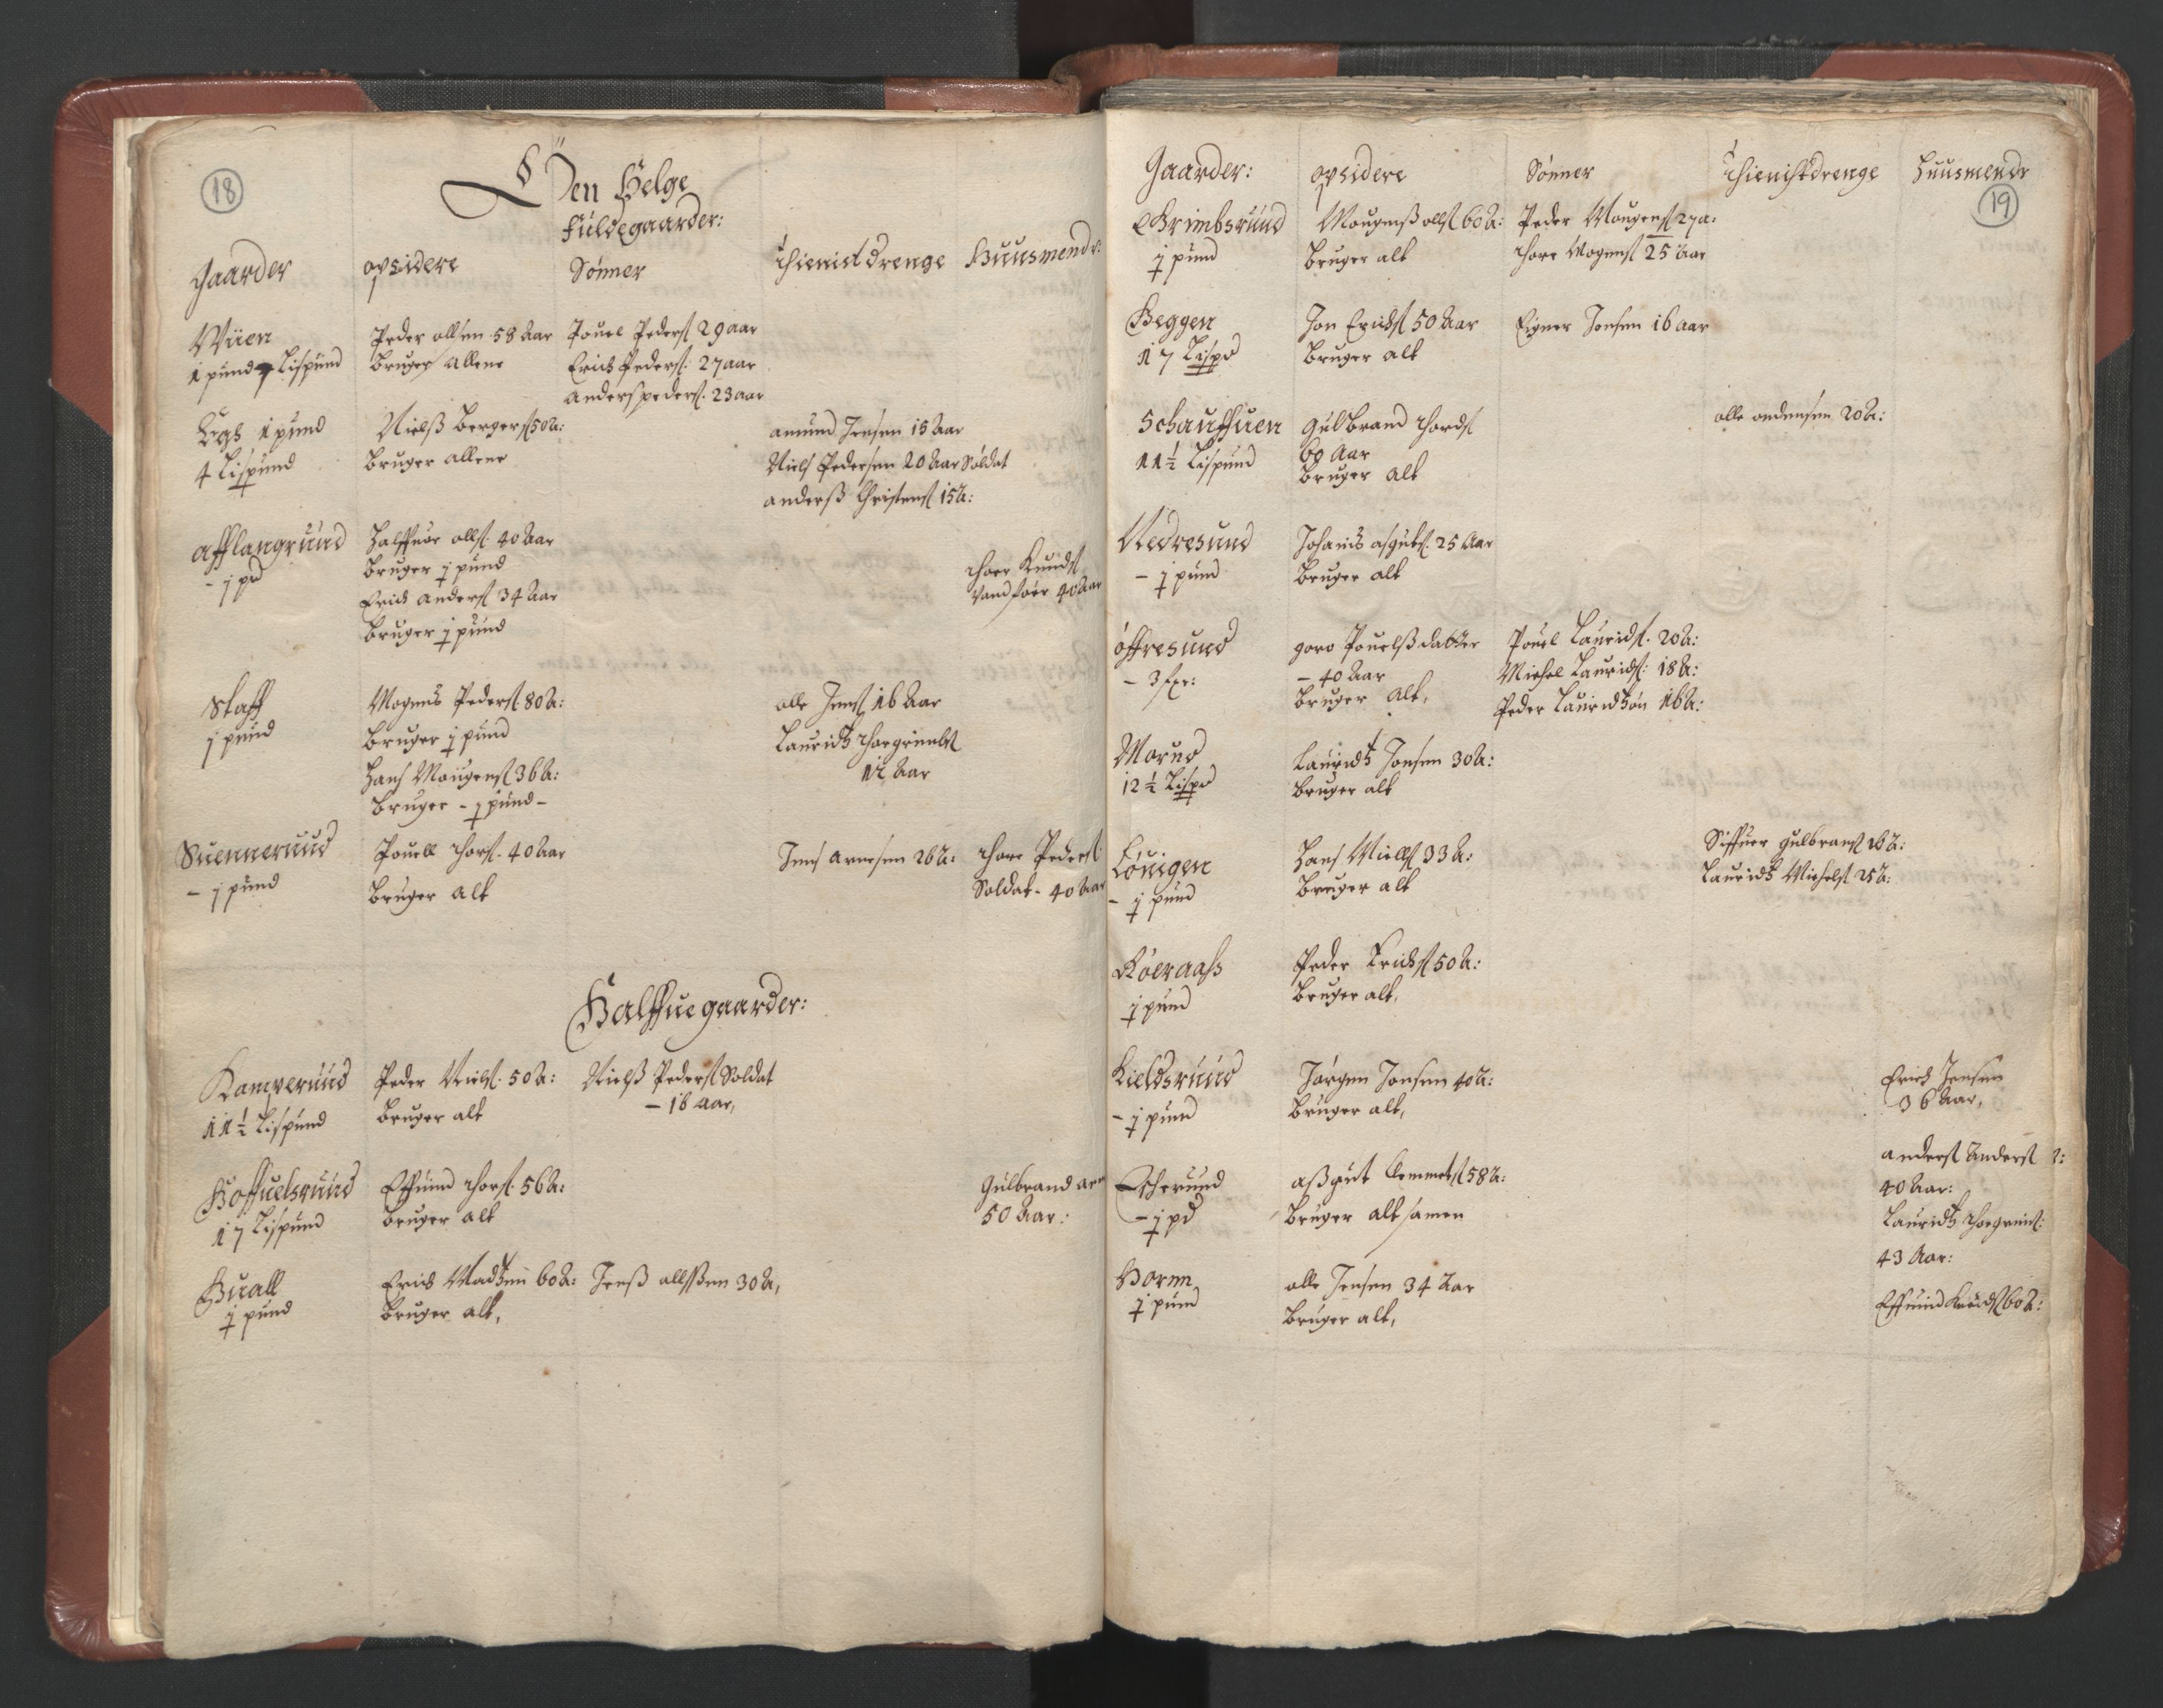 RA, Fogdenes og sorenskrivernes manntall 1664-1666, nr. 3: Hedmark fogderi og Solør, Østerdal og Odal fogderi, 1664, s. 18-19